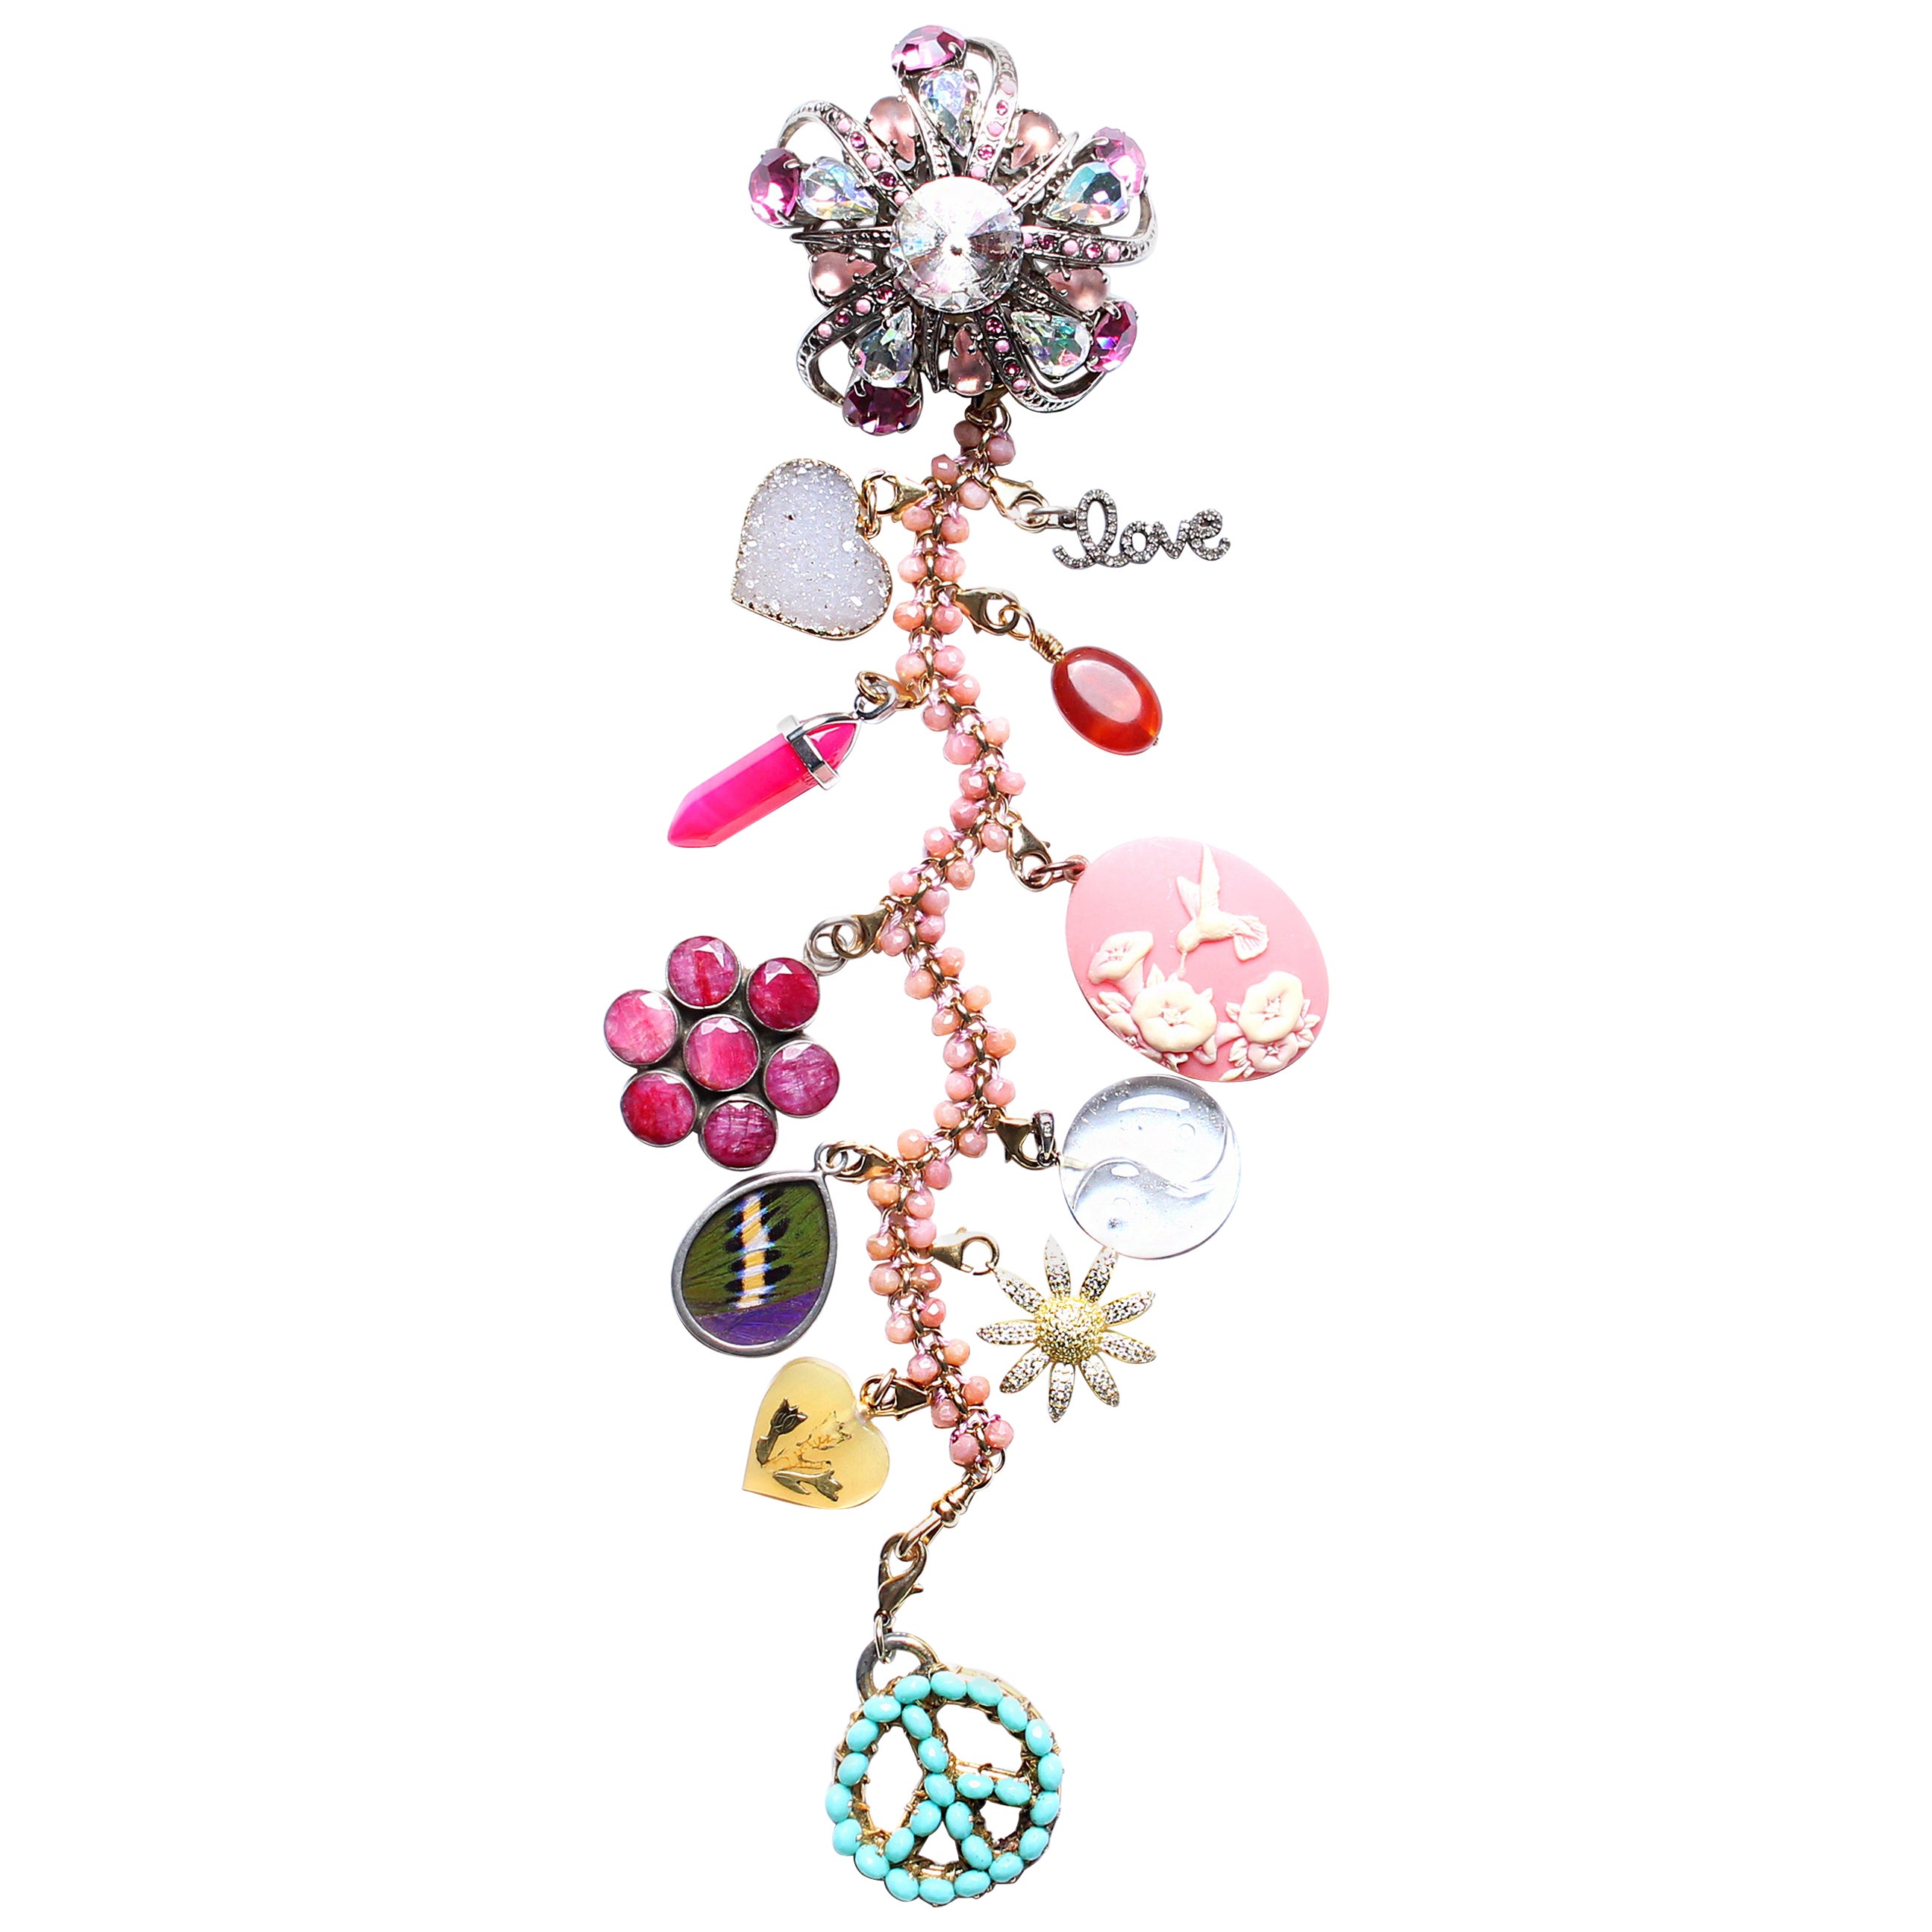 Clarissa Bronfman "Pink Martini II" Symbol Tree Necklace